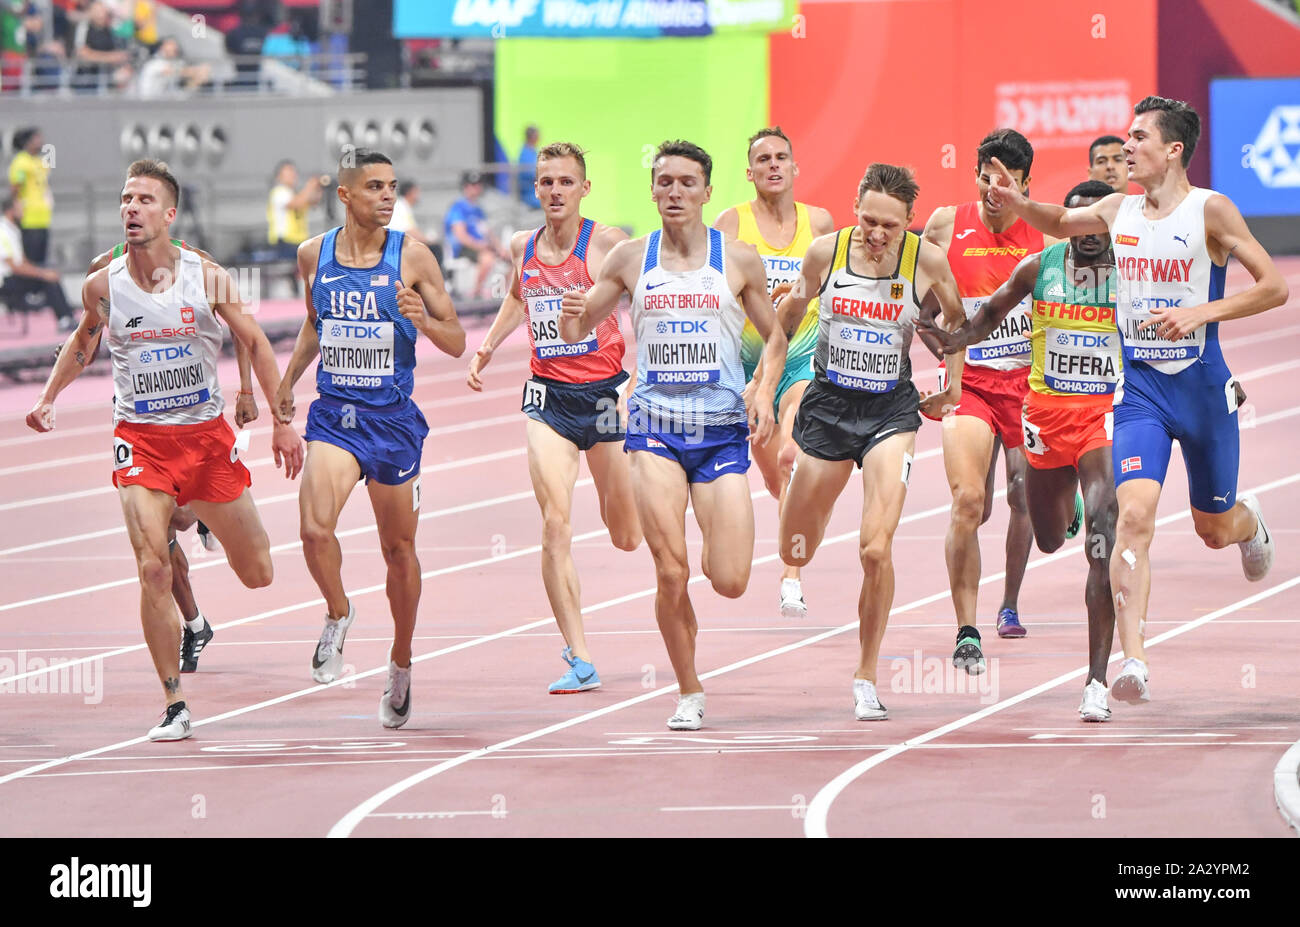 1500 mètres série : Jakob Ingebrigtsen, Matthew Centrowitz, Jake Wightman, Marcin Lewandowski, Amos, Bartelsmeyer Samuel Tefera, Adel, Filip Sasínek Mechaal. Championnats du monde d'athlétisme de l'IAAF, Doha 2019 Banque D'Images